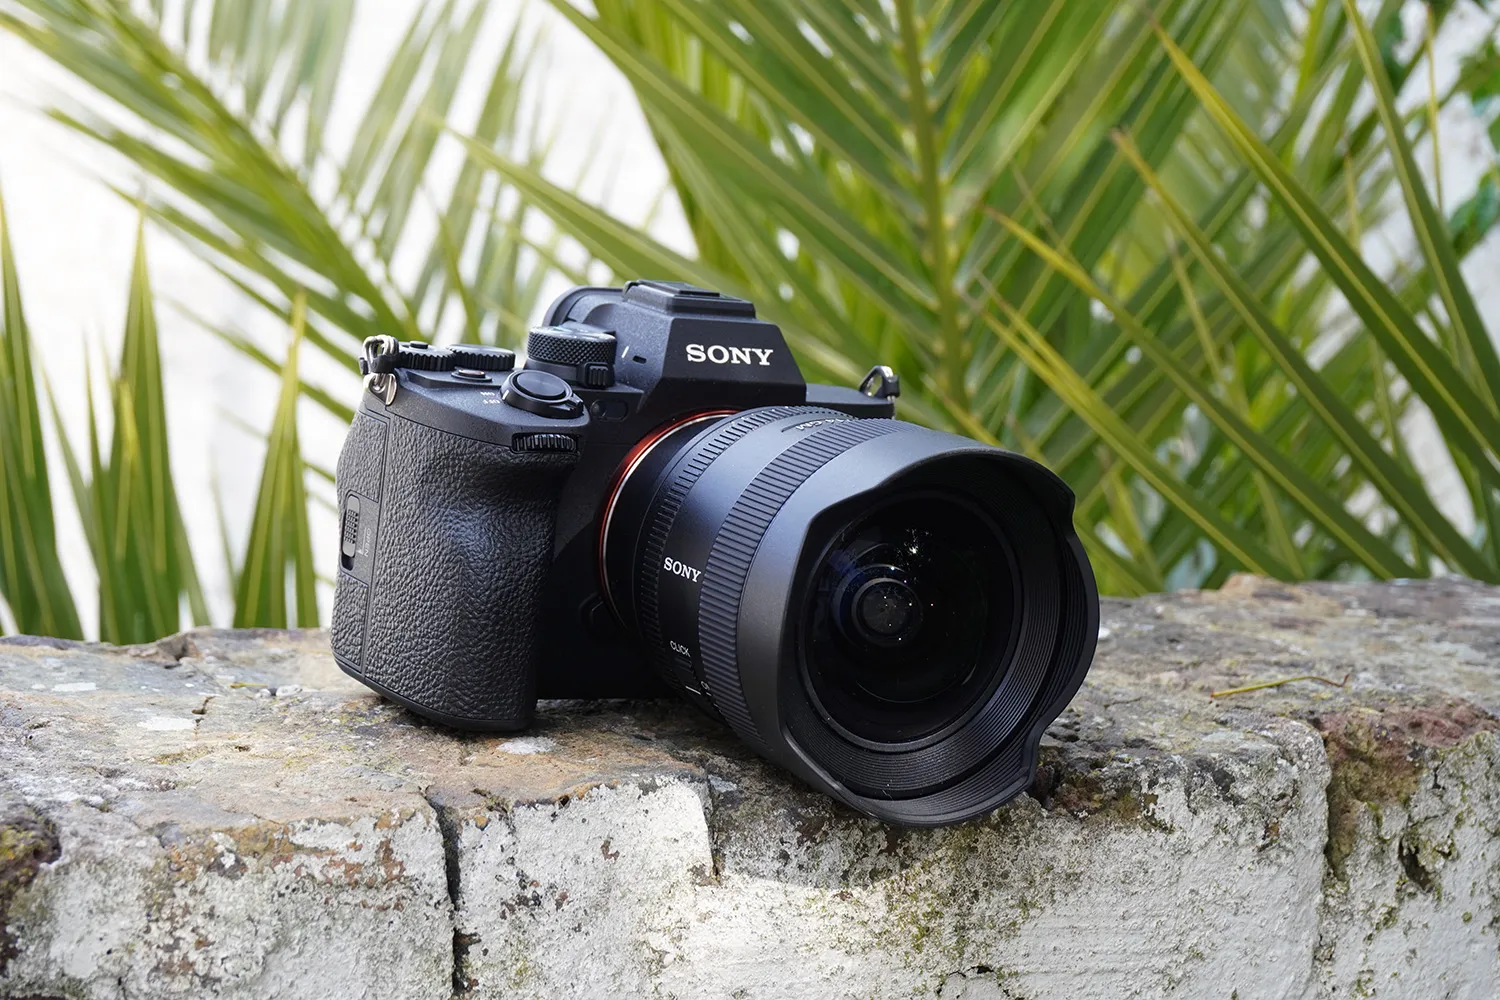 Sony a7 IV Review – a Pretty Advanced Entry-Level Mirrorless Camera